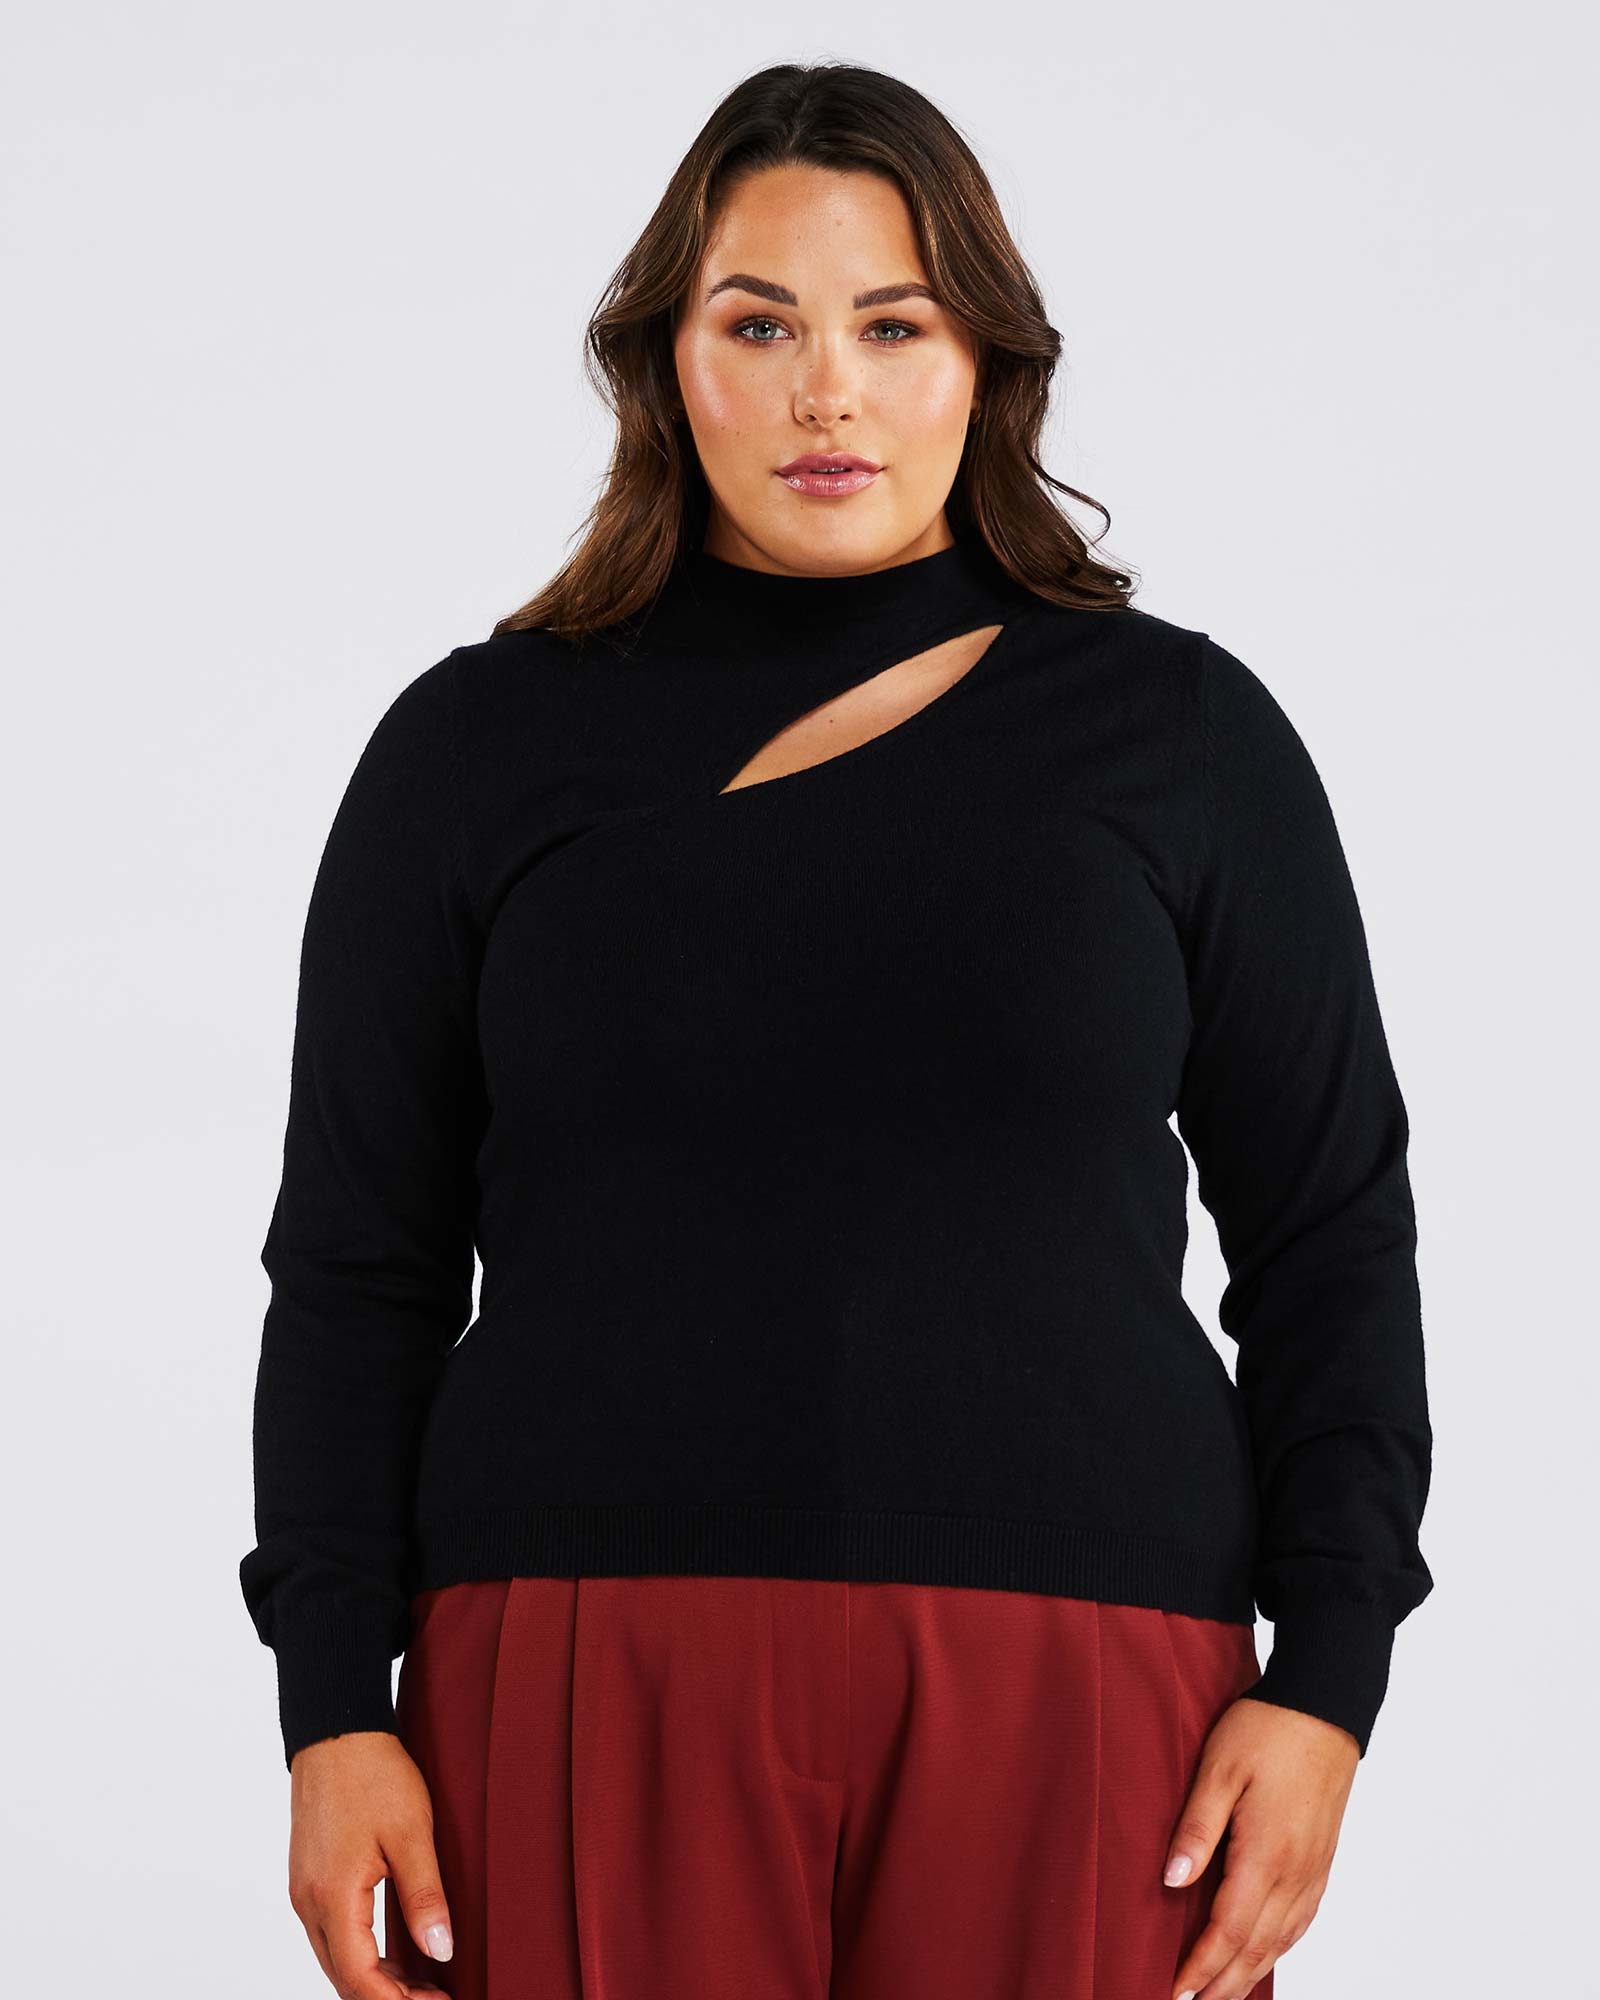 A plus-size woman rocking a Black Cut Out Crewneck Sweater, showcasing her fashion quotient.